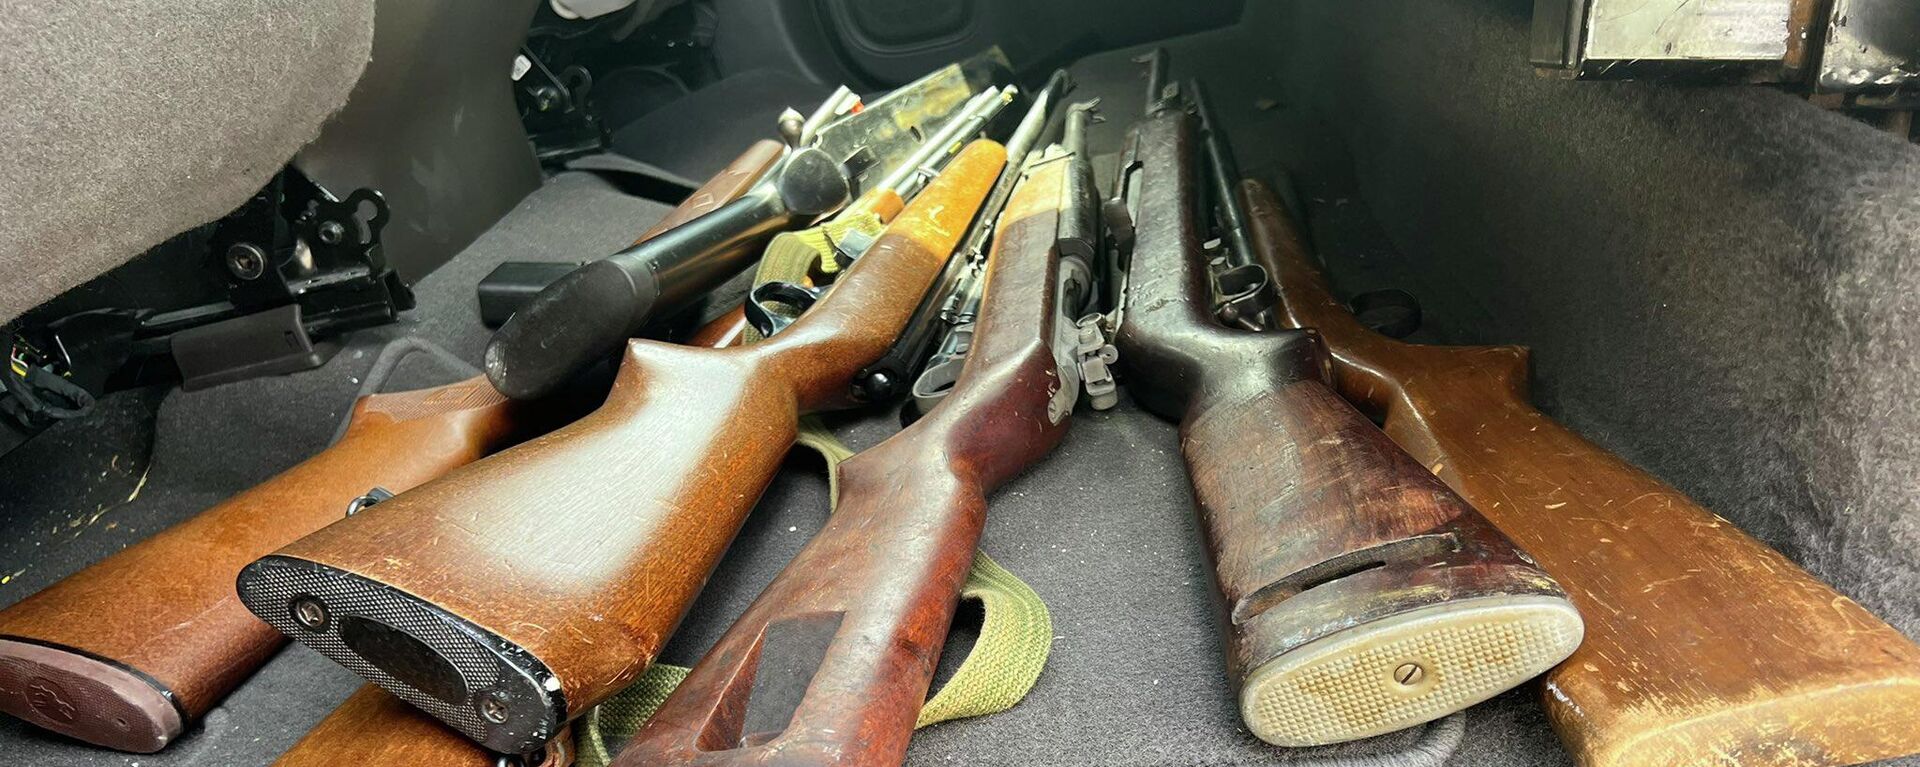 Algunos rifles entregados en el programa de desarme 'Guns 4 Ukraine' - Sputnik Mundo, 1920, 27.06.2022